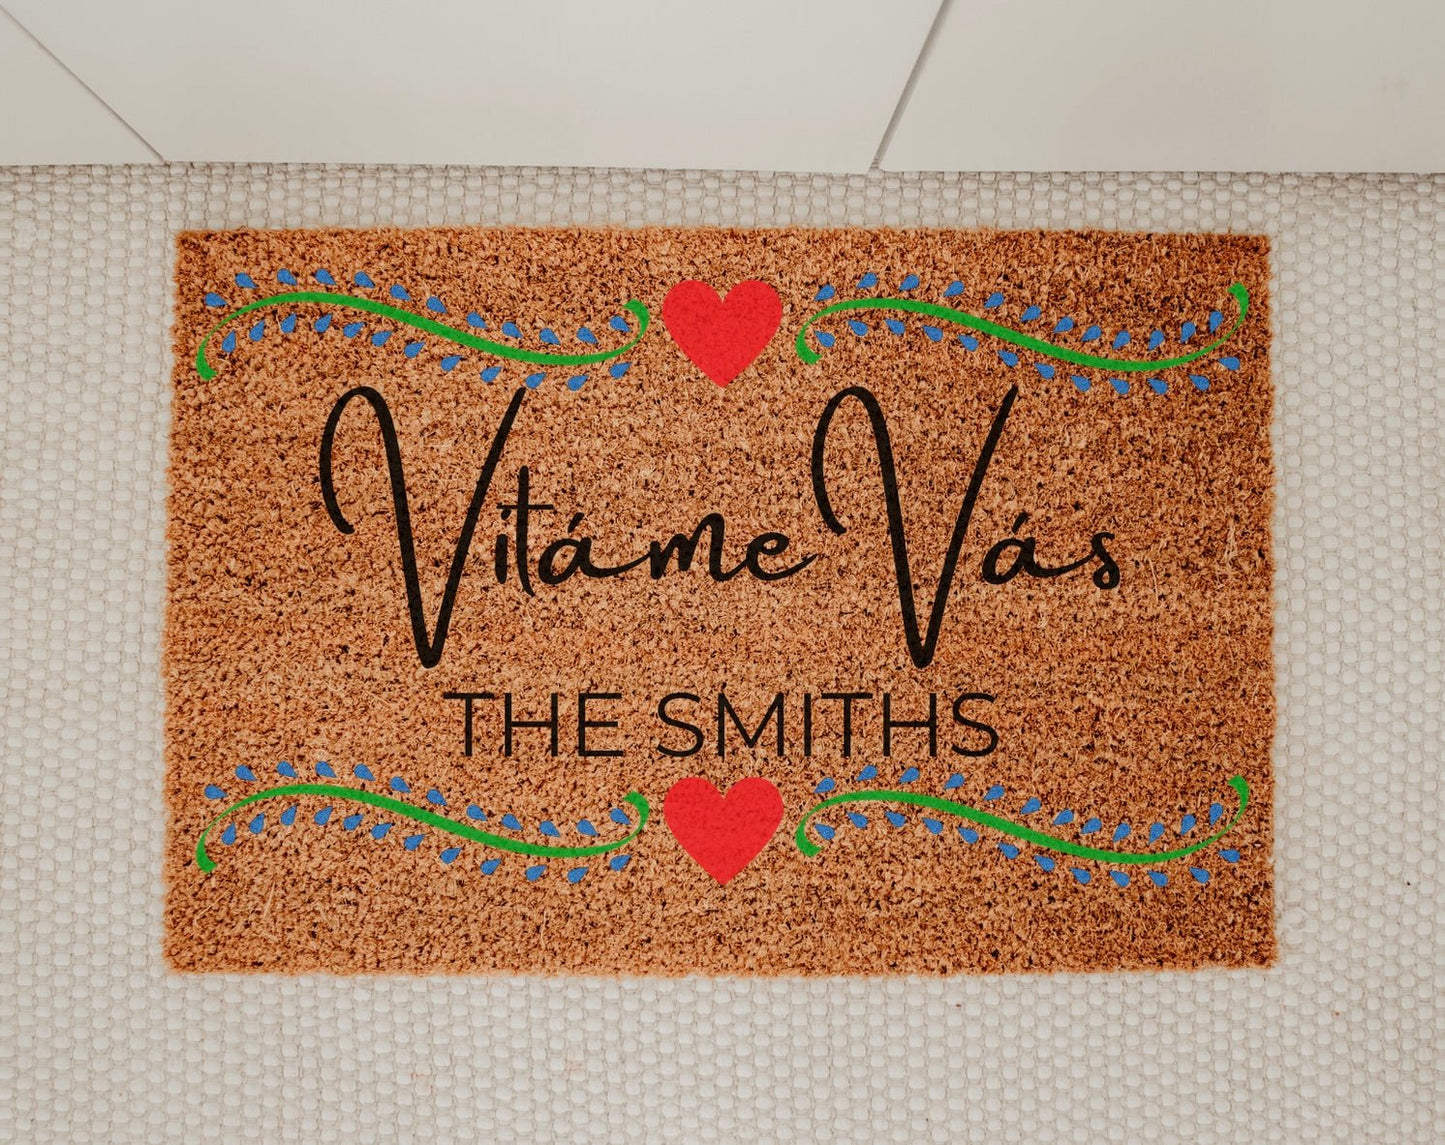 Vitame Vas - Name #1 - Miss Molly Designs, LLC